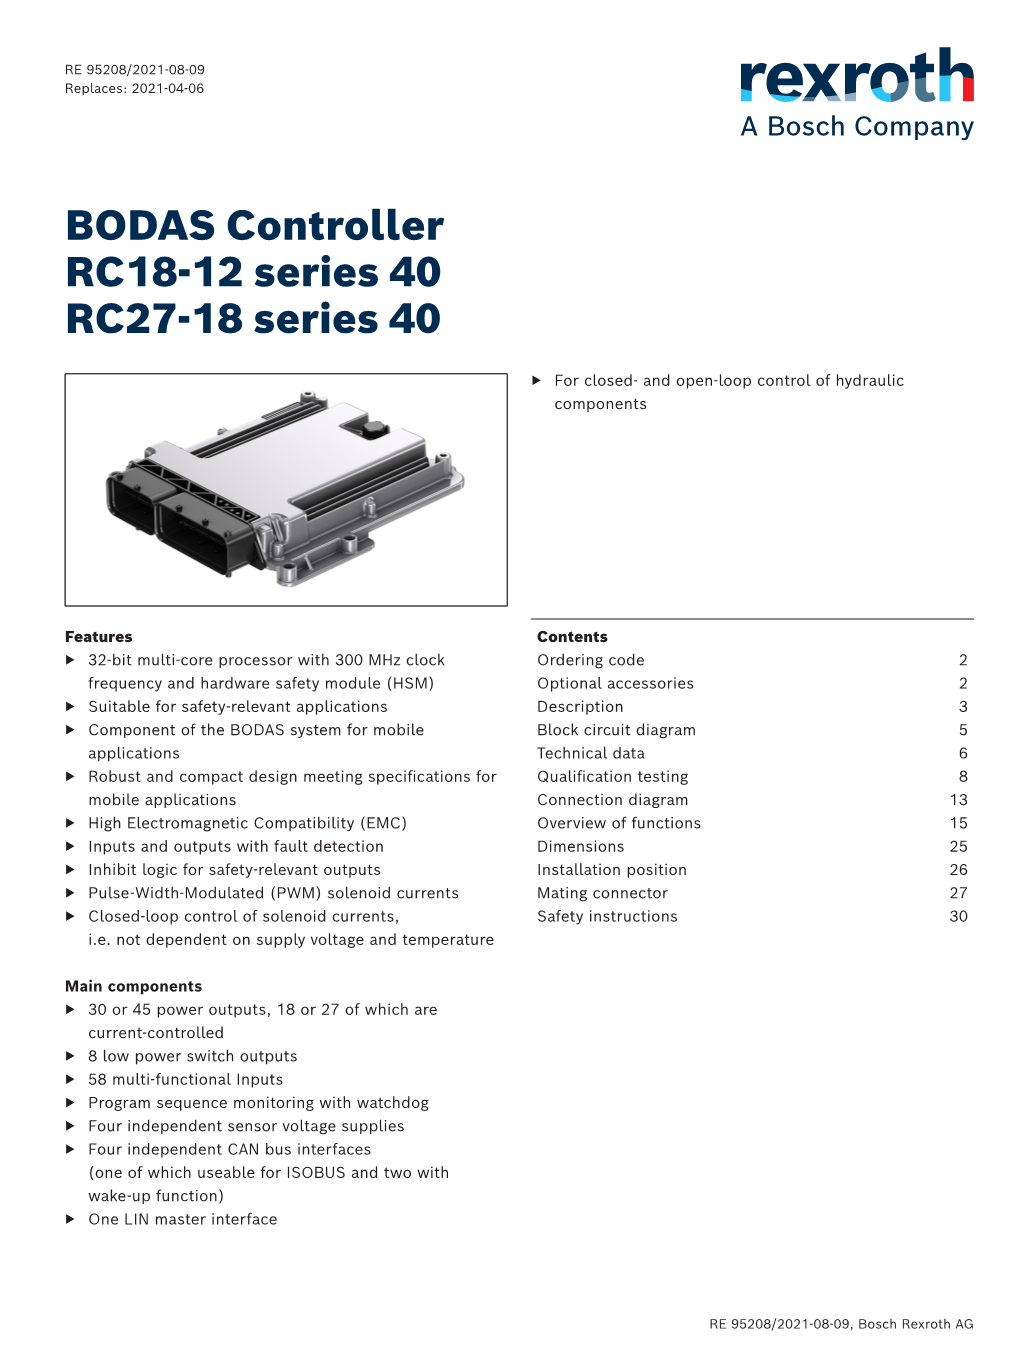 BODAS Controller RC18-12 Series 40 RC27-18 Series 40